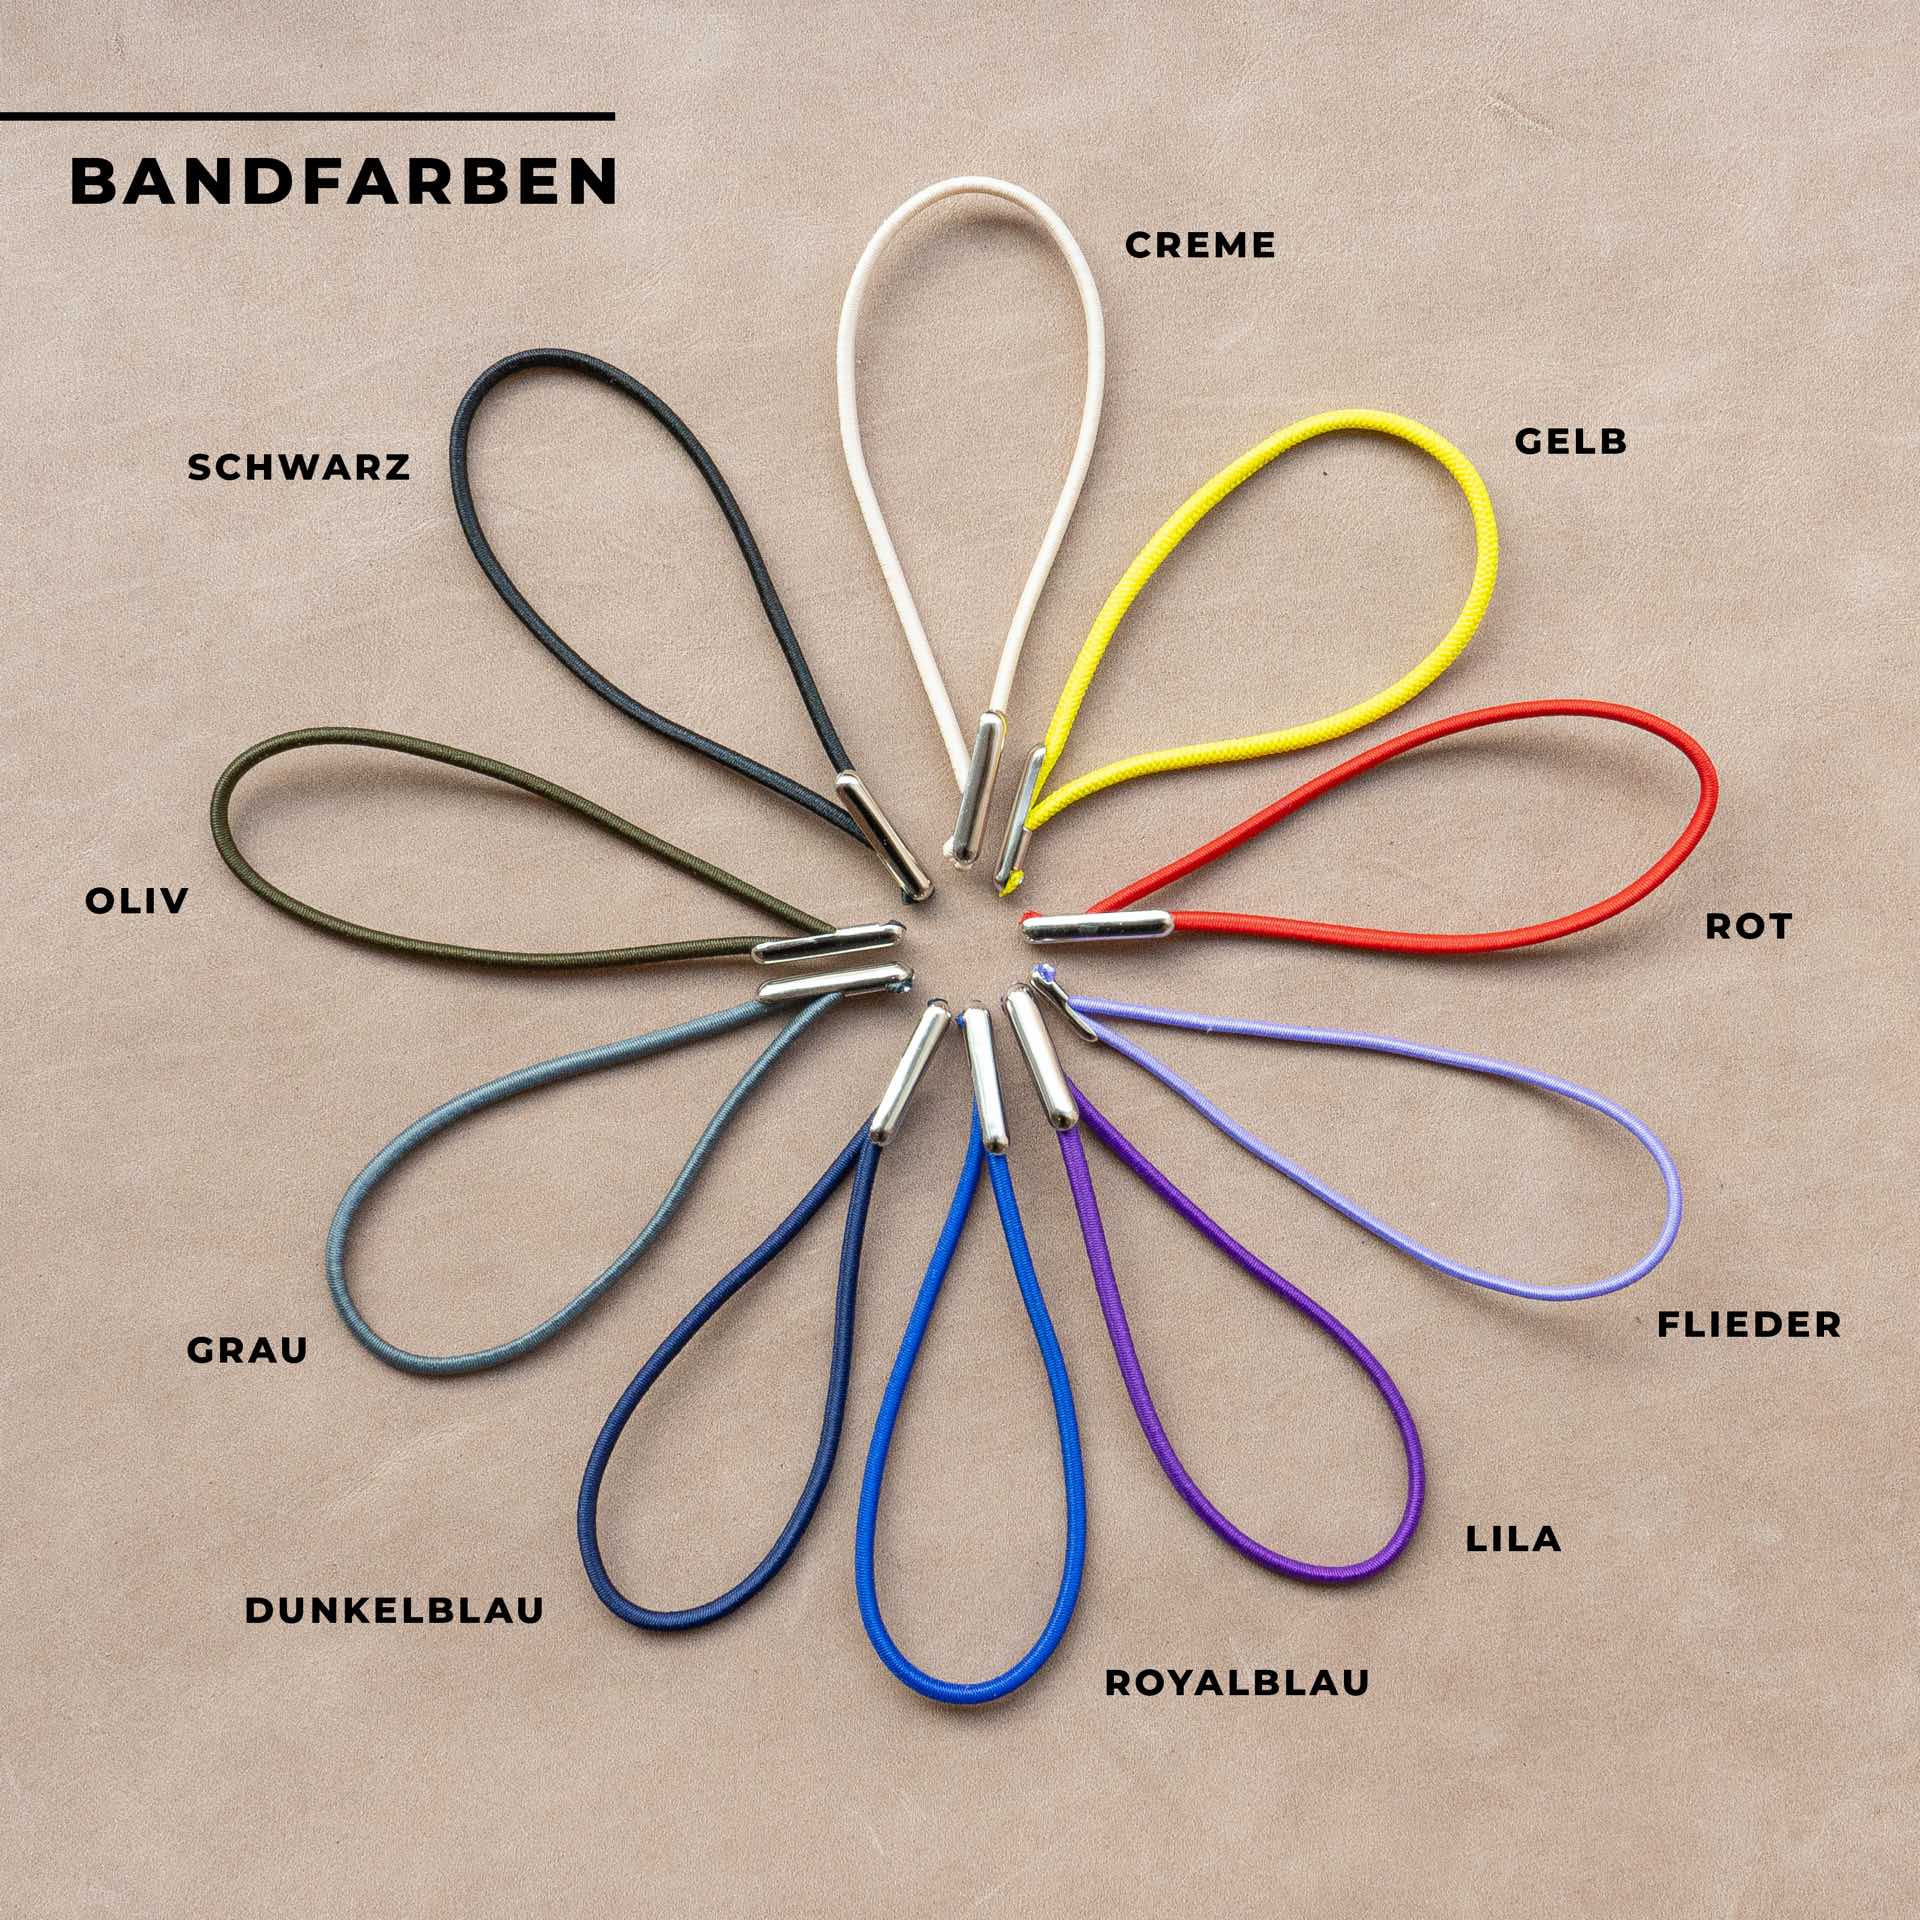 Bandfarben-Franziska-Klee-hellbraun-bandfarben